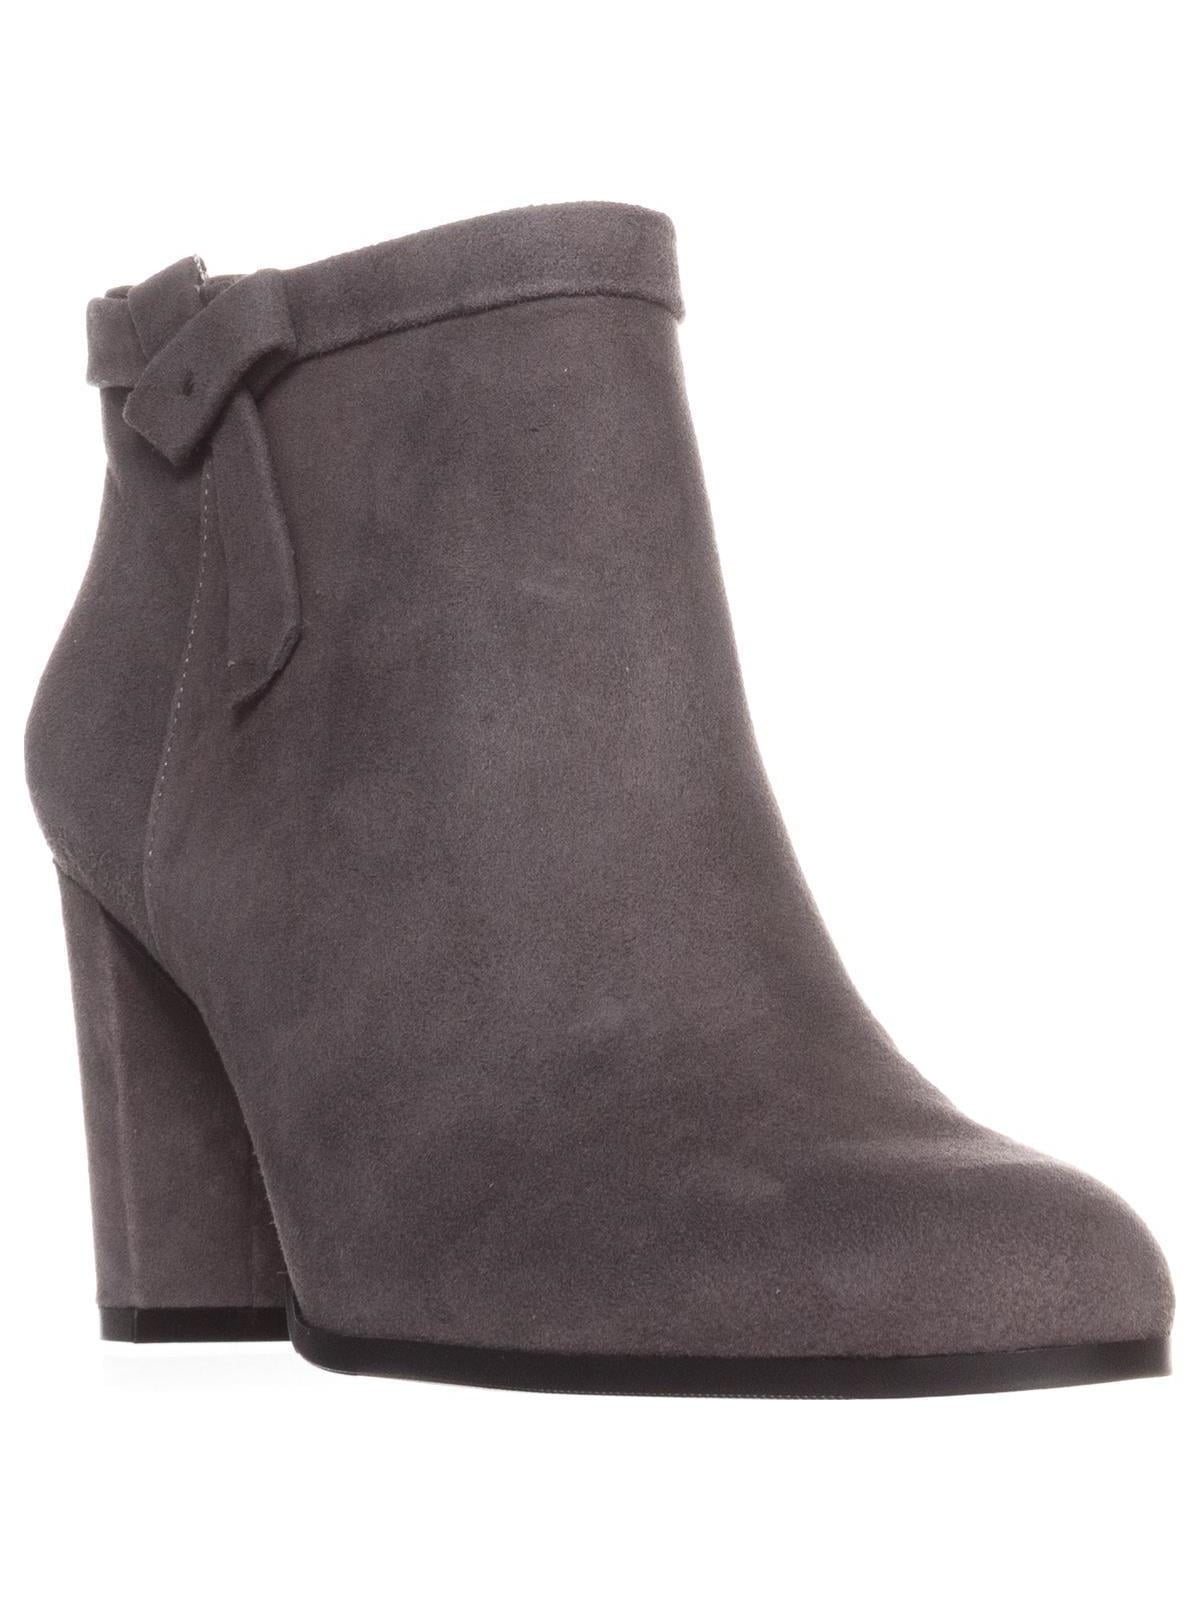 Womens Bandolino Belluna Ankle Boots, Dark Grey Suede, 9.5 US - Walmart.com